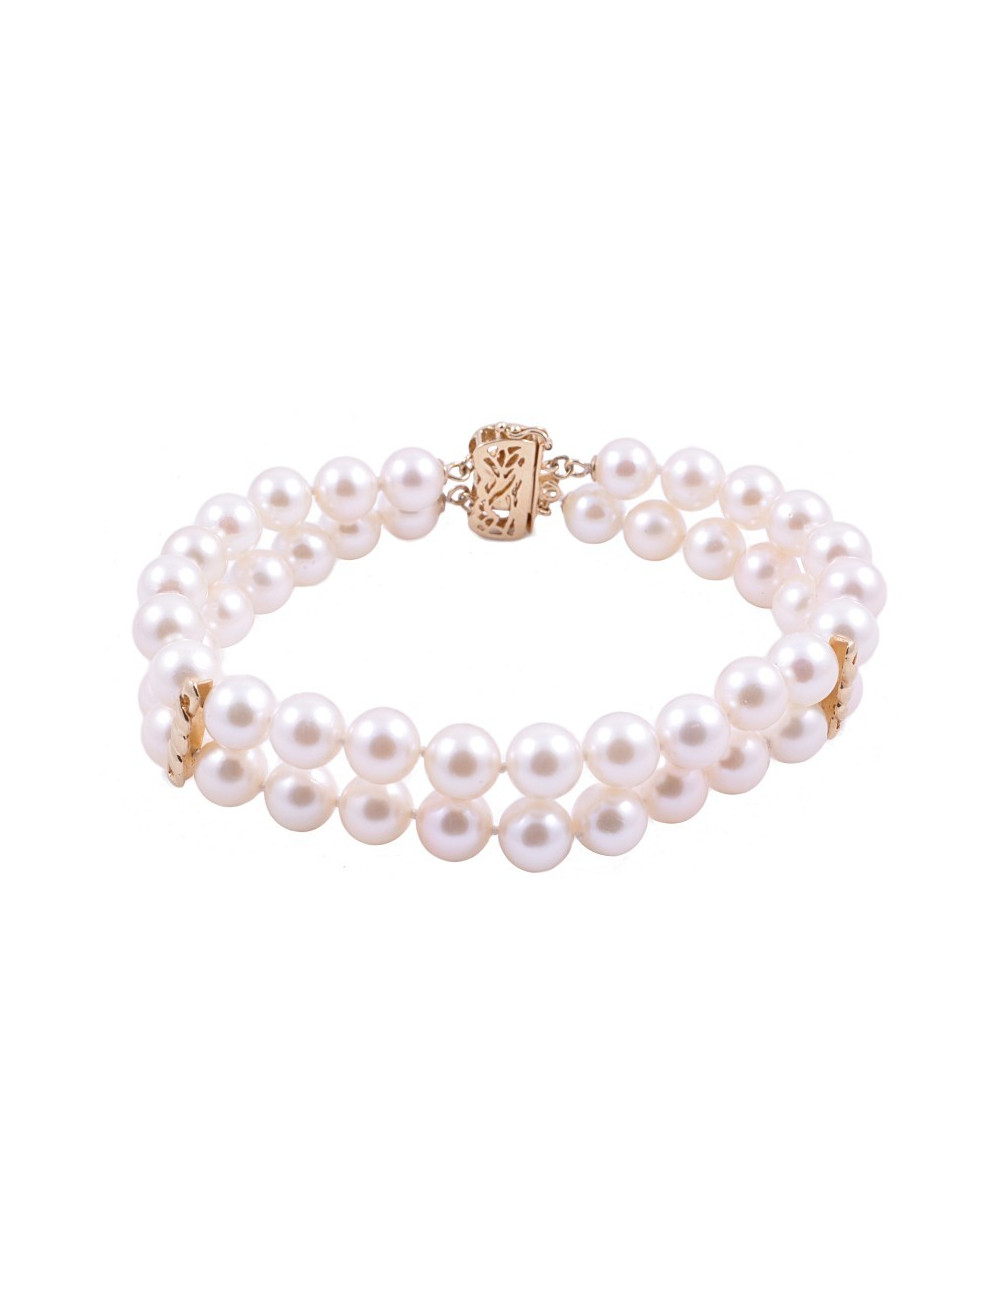 Double row gold bracelet with white Akoya pearls Bm775x2G60922